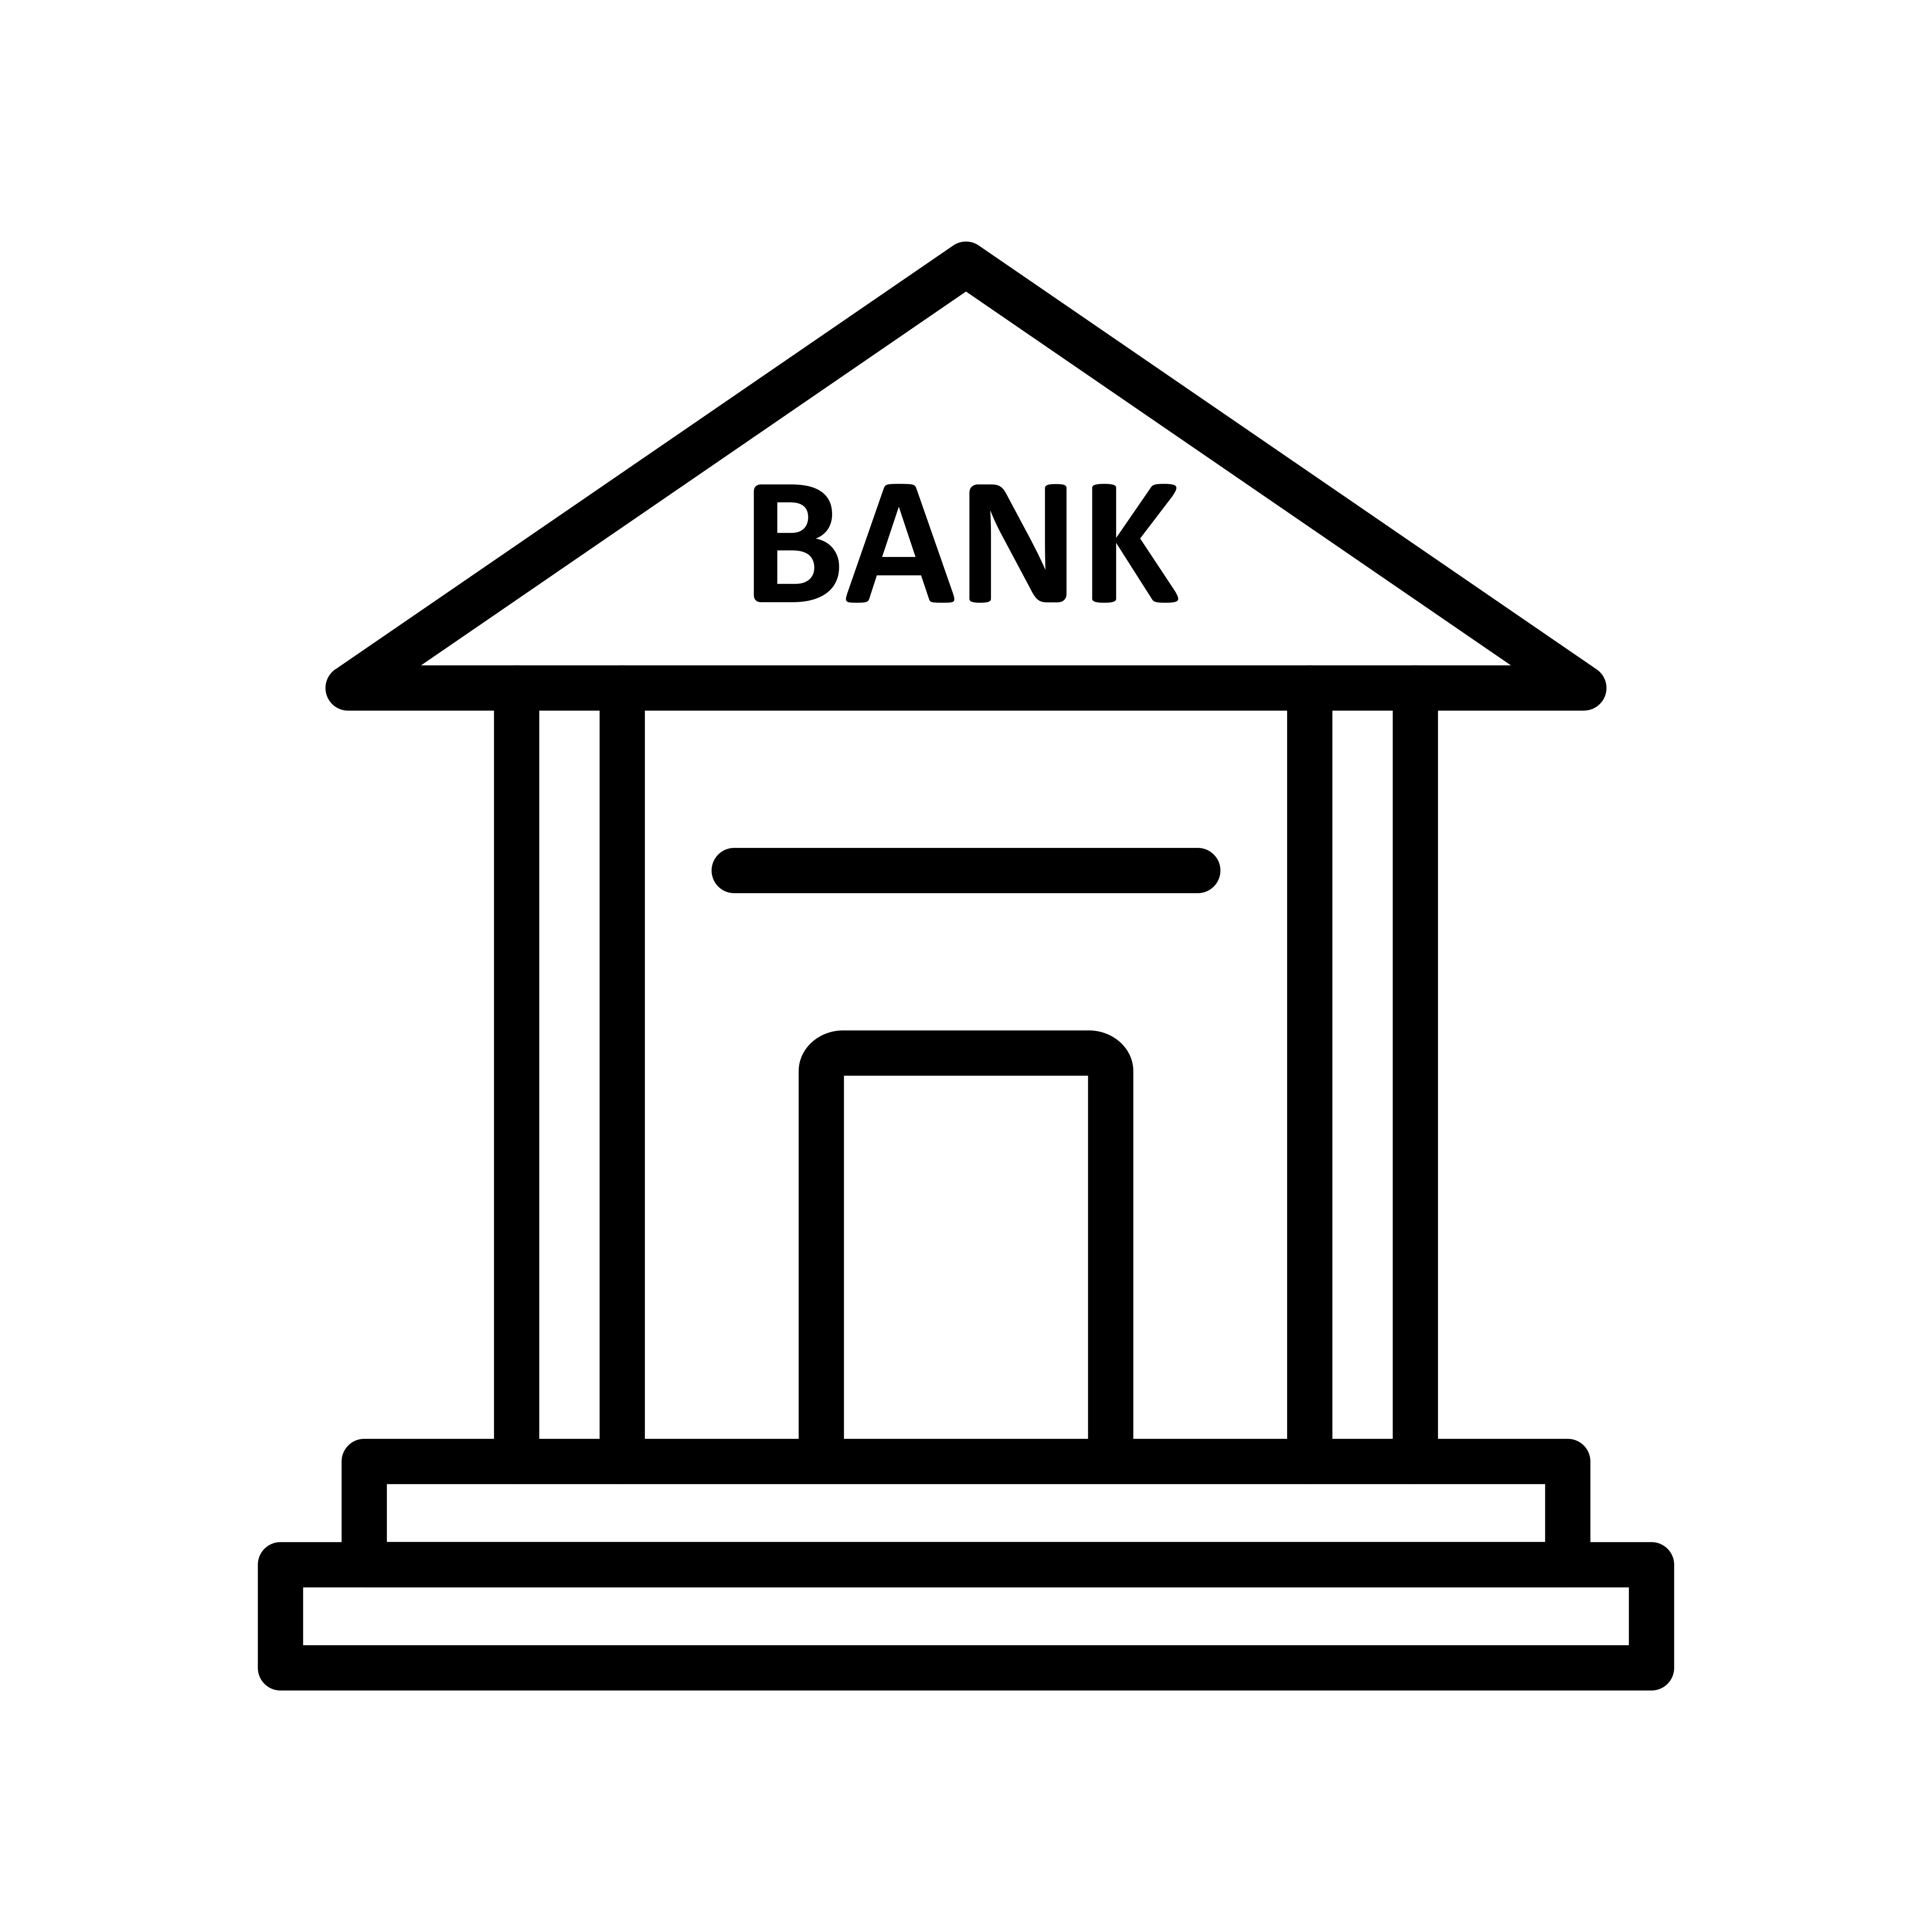 Bank image